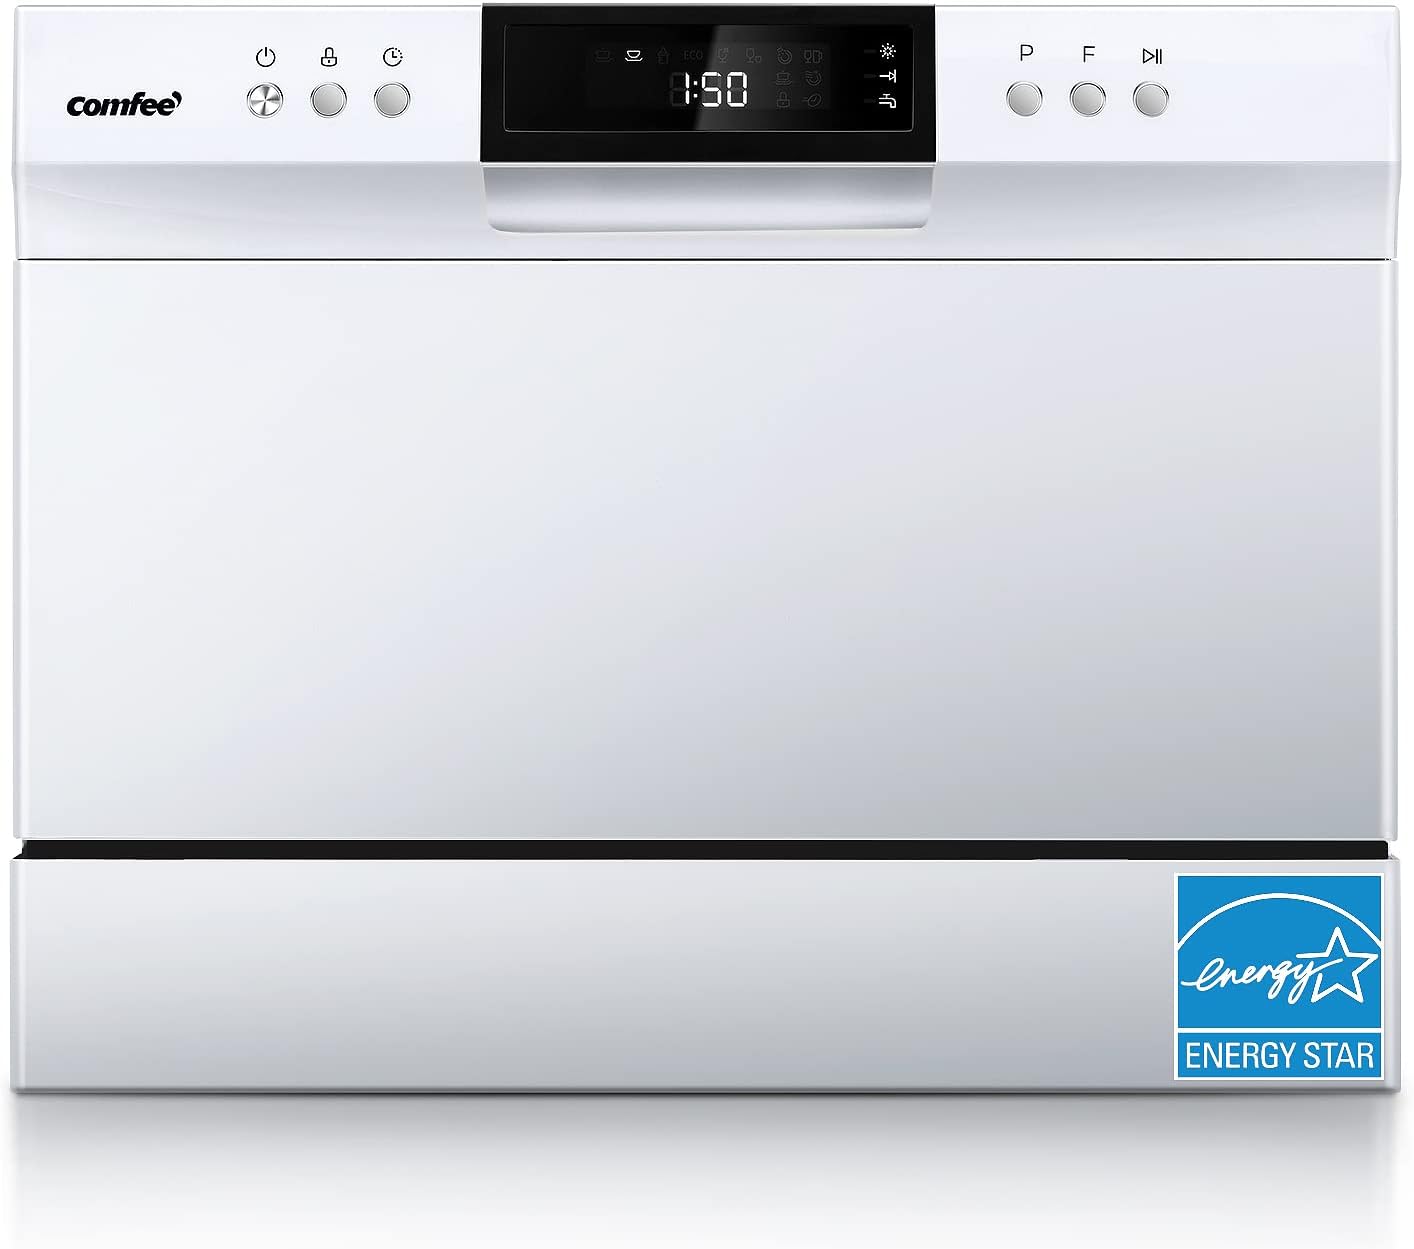 COMFEE’ Countertop Dishwasher, Energy Star Portable [...]